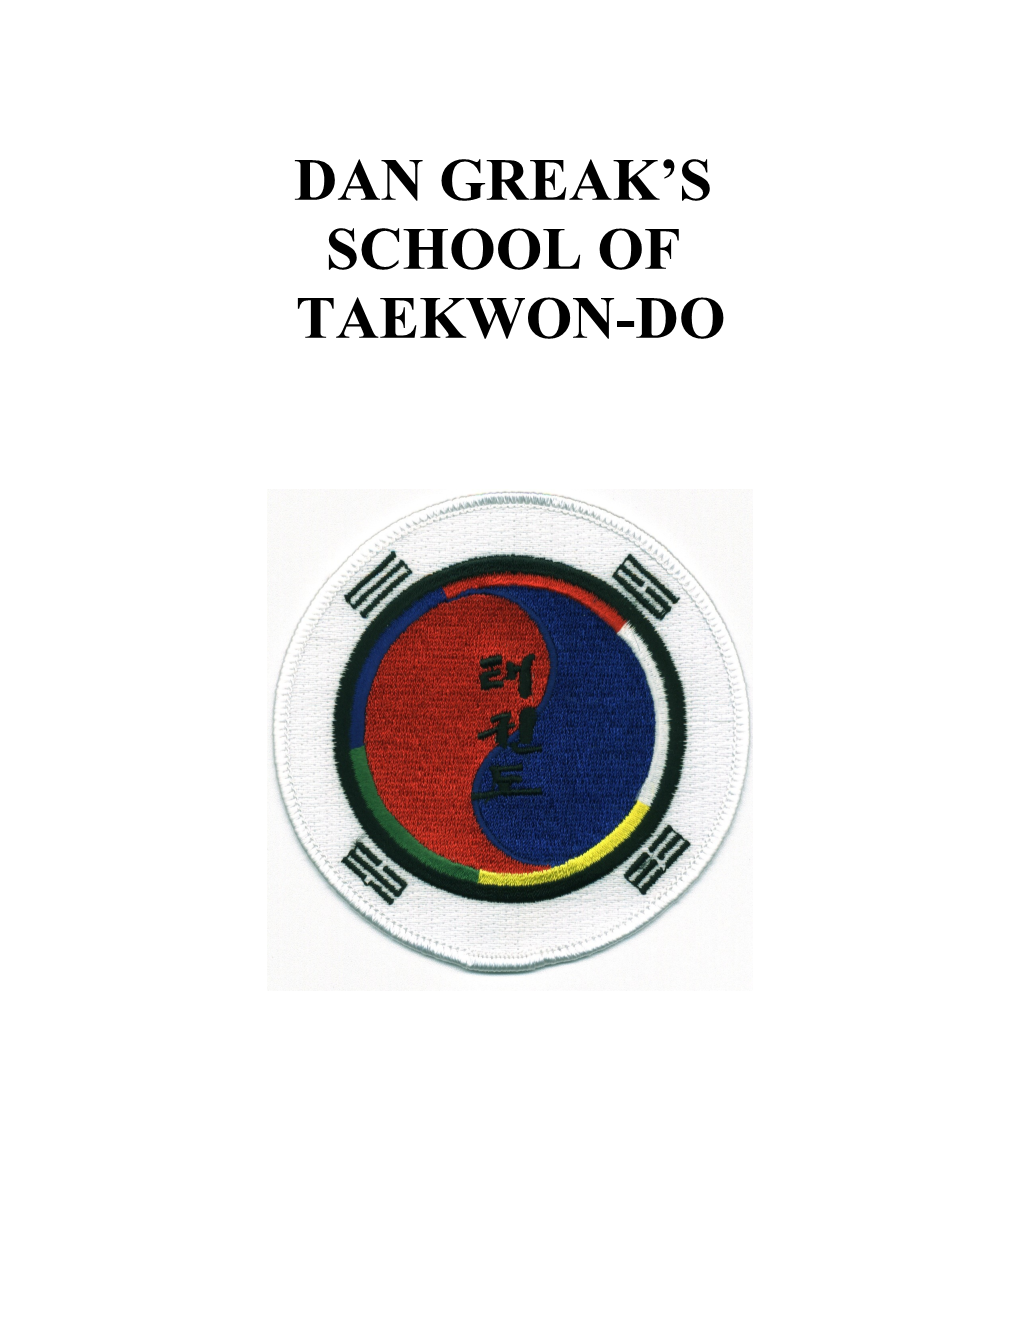 Dan Greak S School of Taekwon-Do